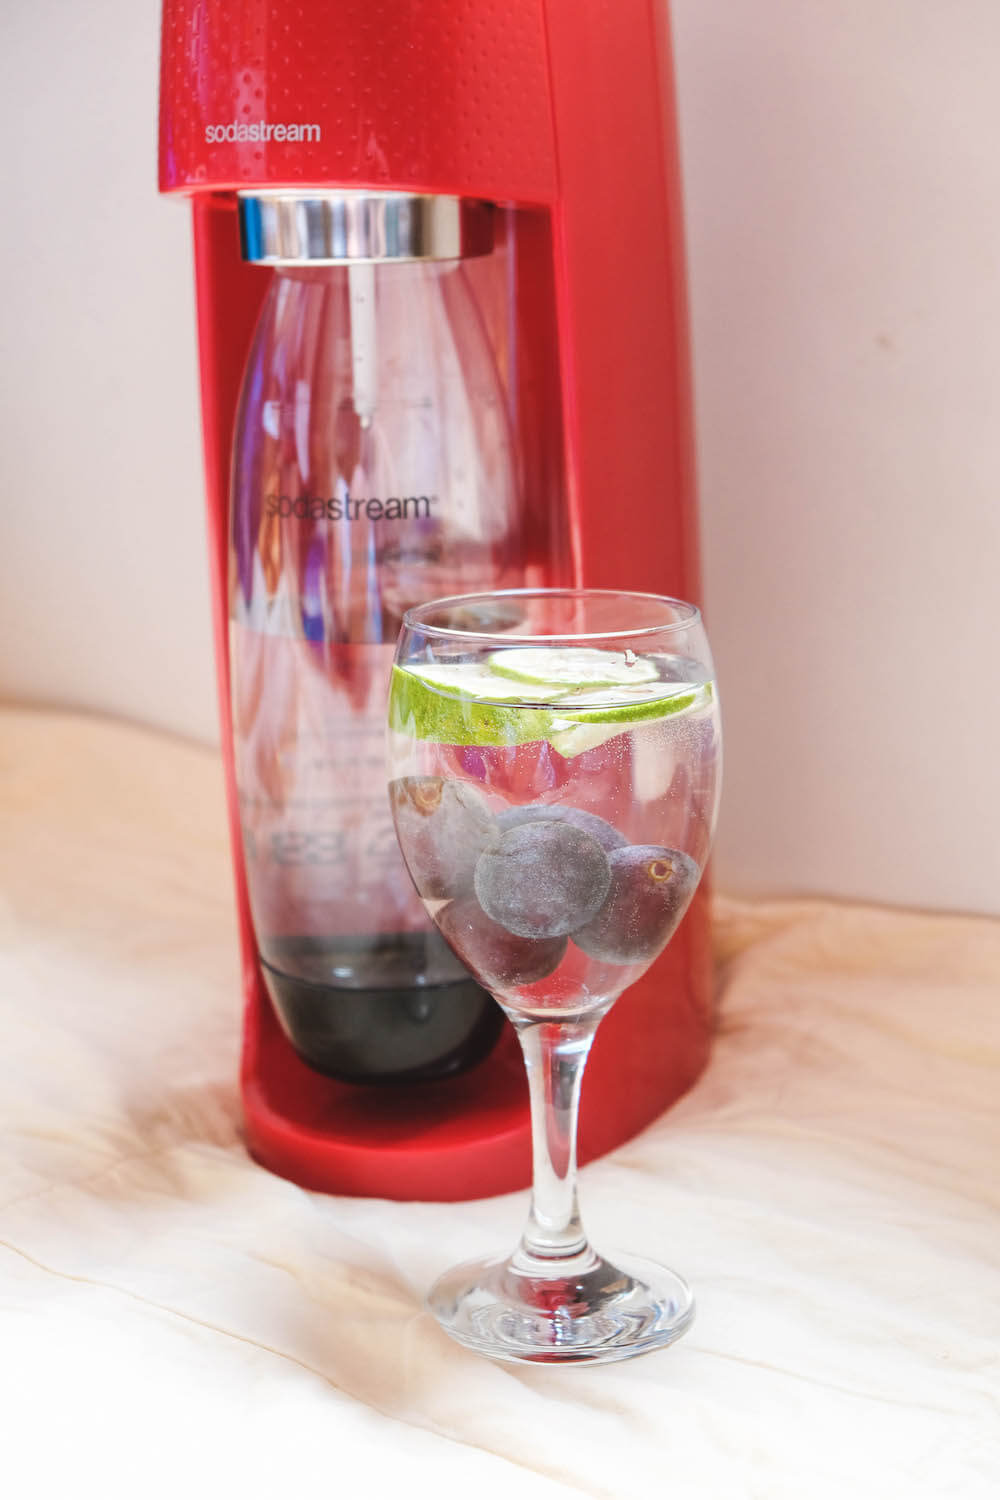 お家カフェ自製氣泡飲！輕鬆按壓「sodastream氣泡水機」製作夏季氣泡水果飲